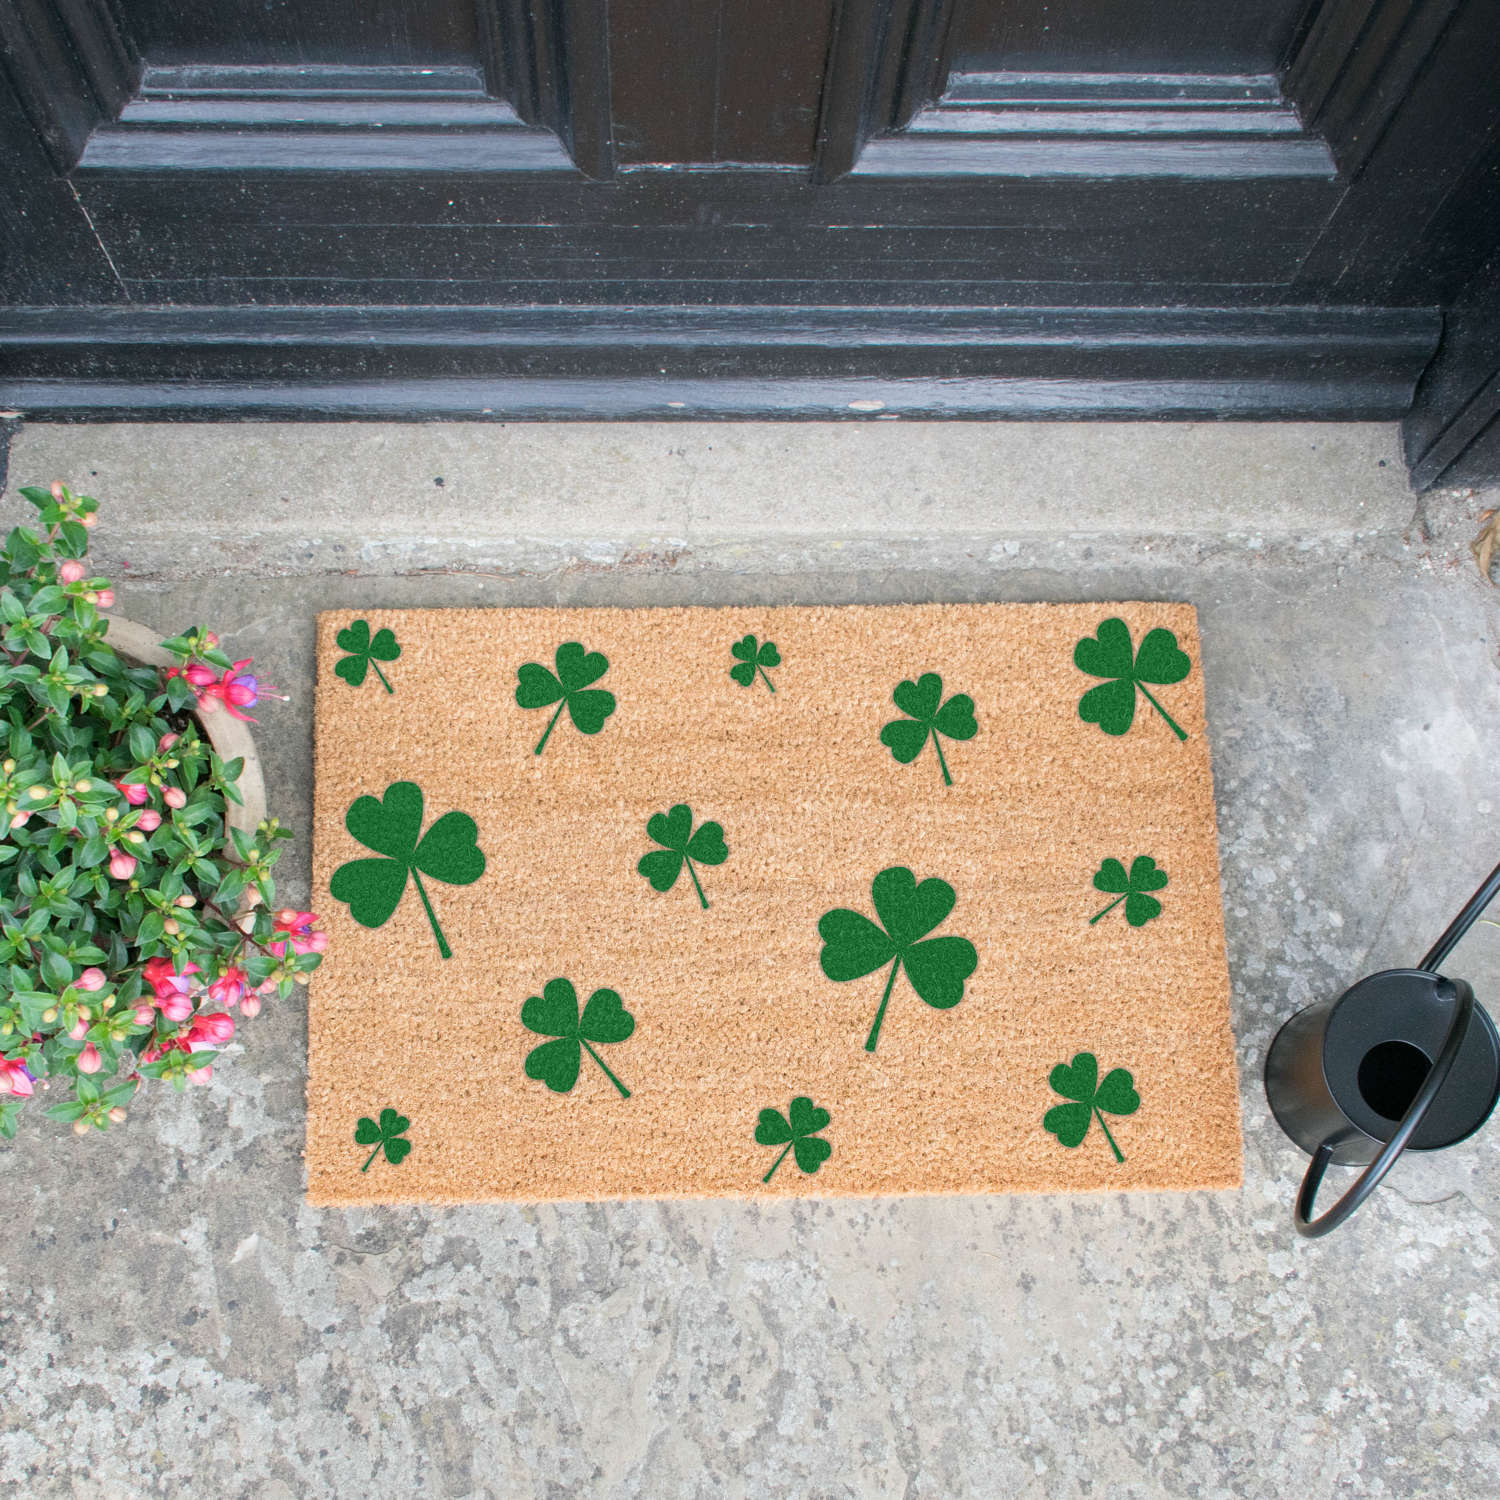 Green shamrock design standard size doormat